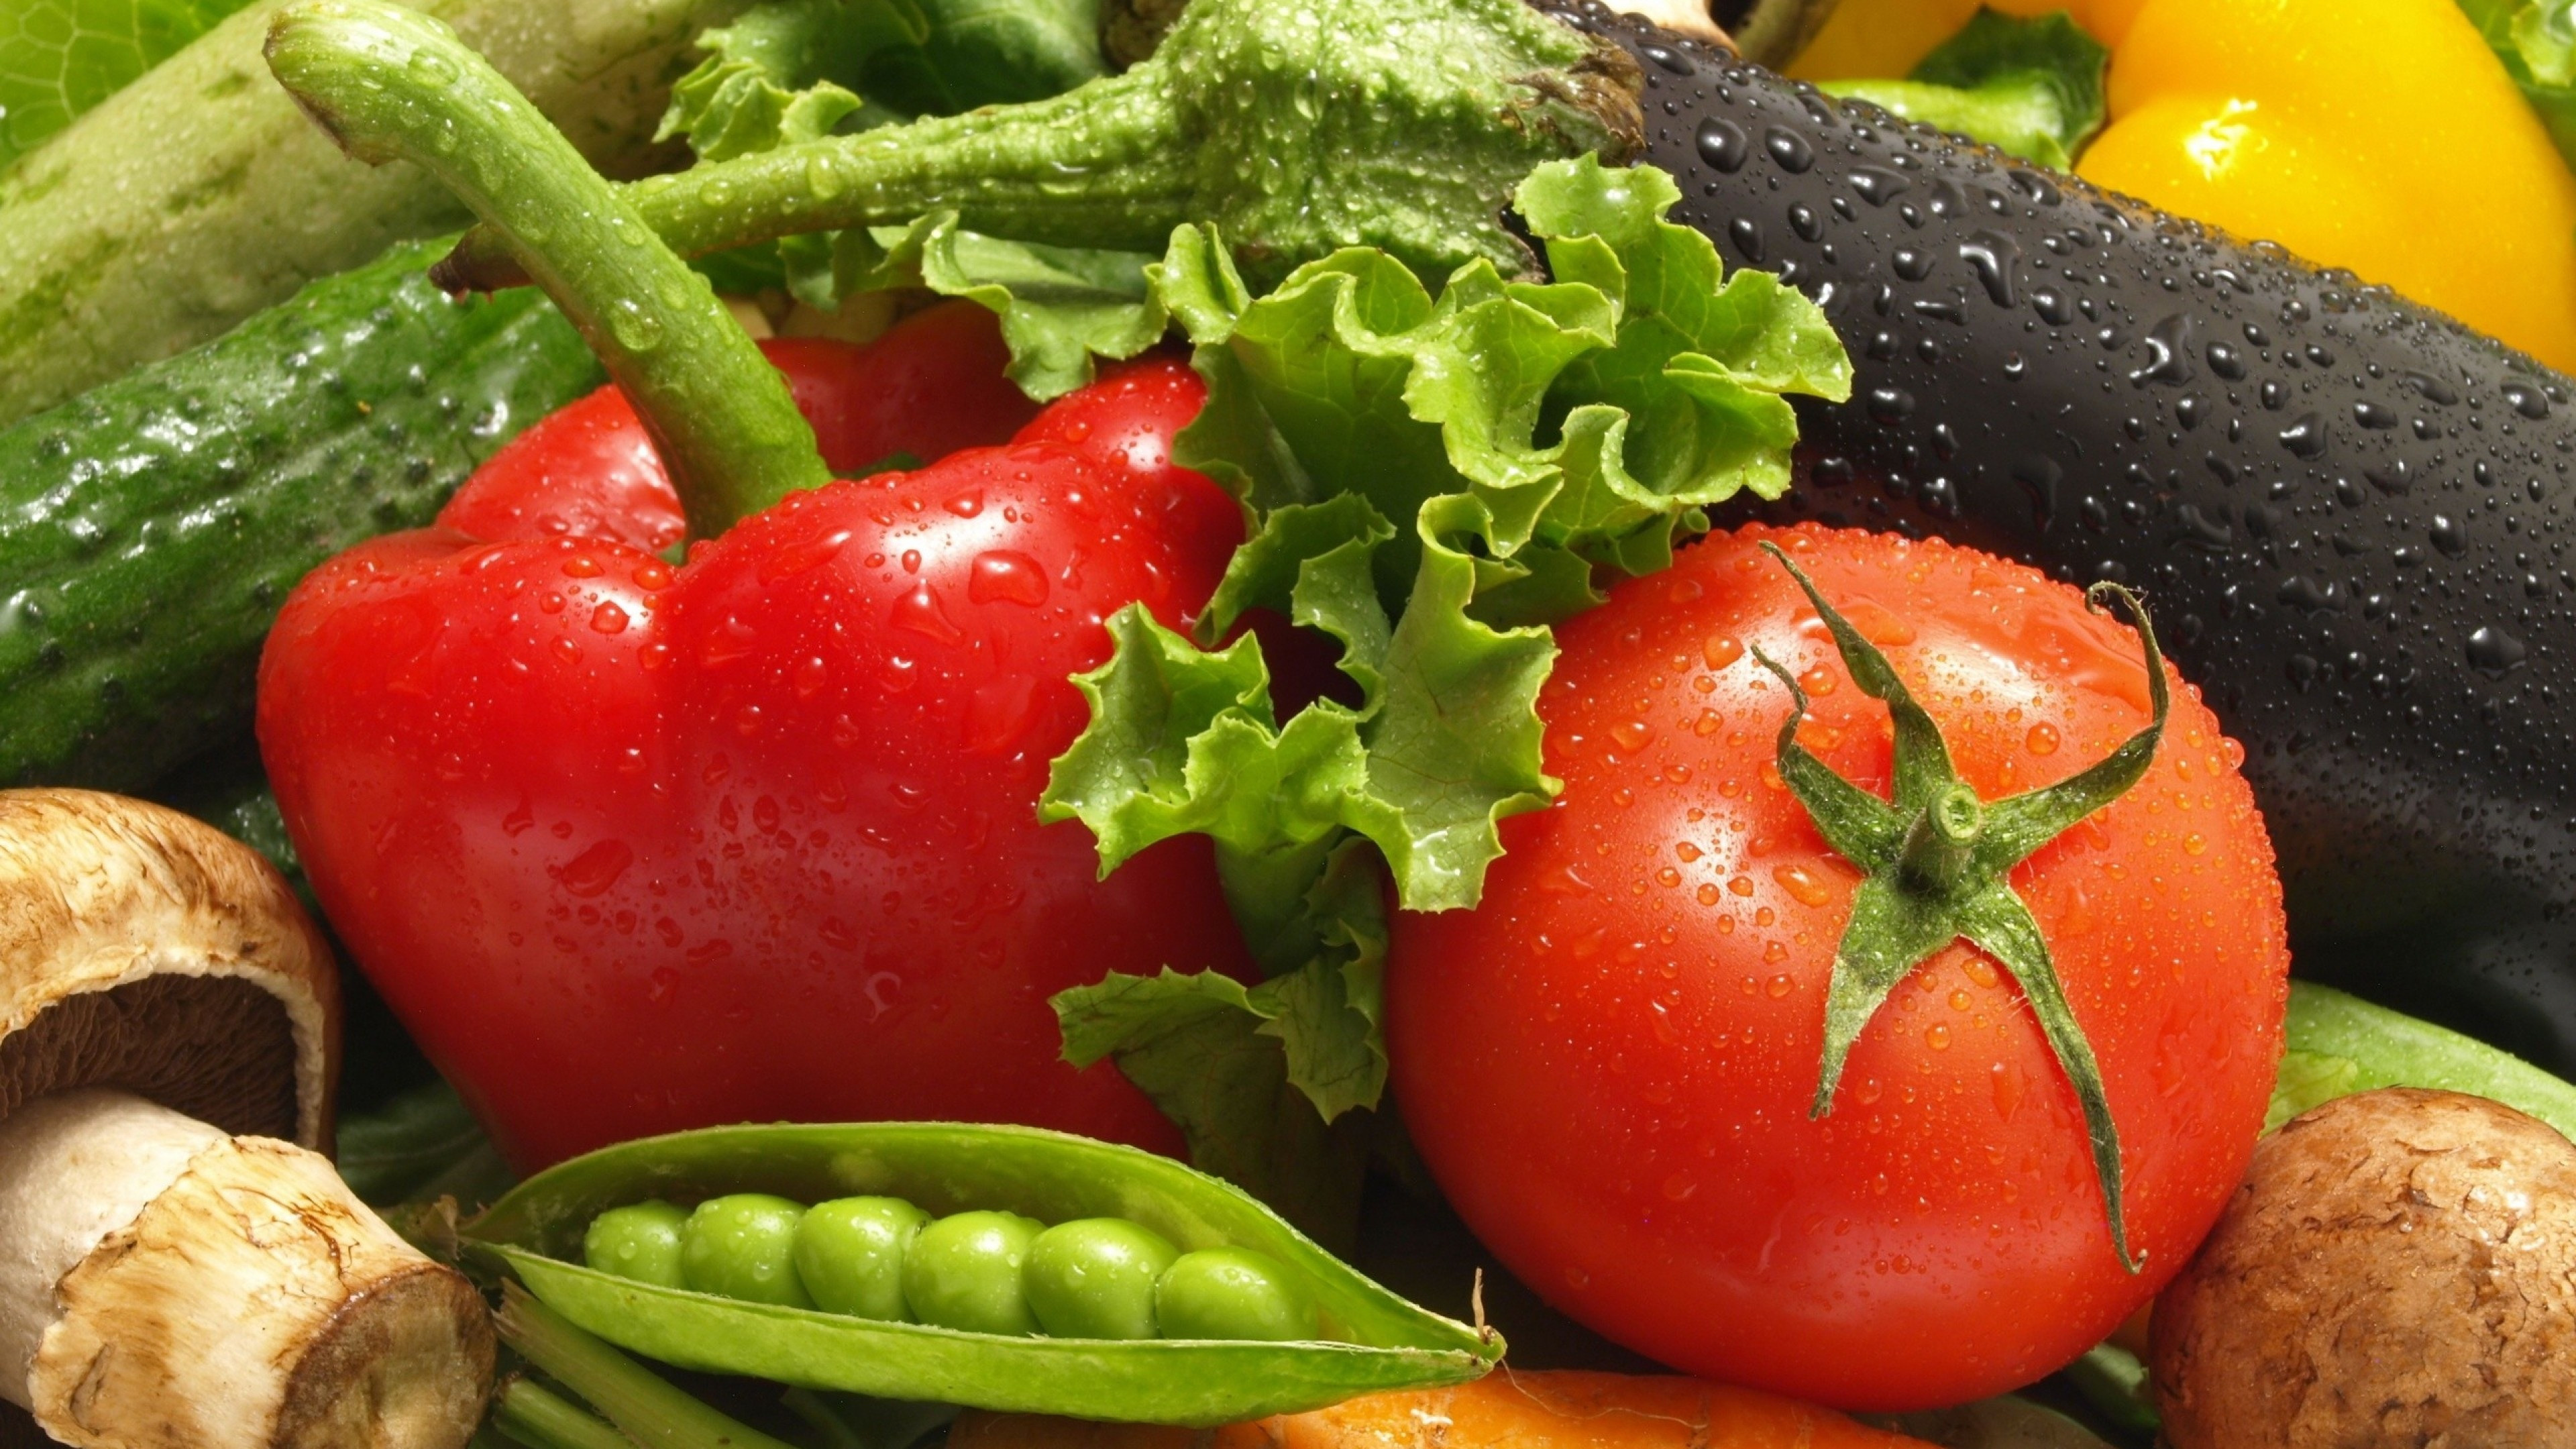 Vegetables: Tomato, The edible berry of the plant Solanum lycopersicum. 3840x2160 4K Wallpaper.